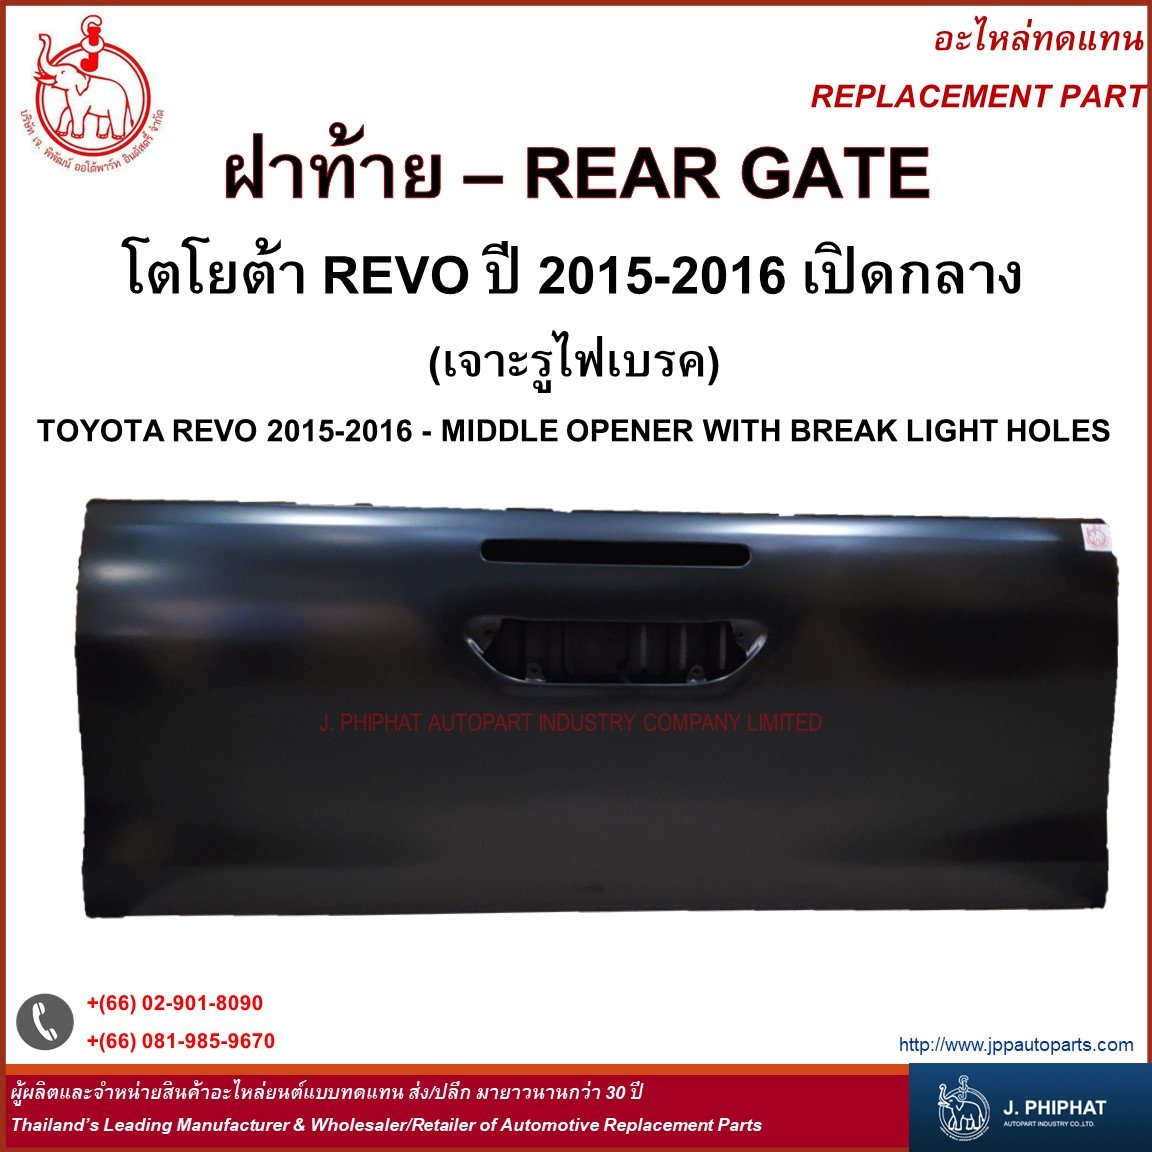 Rear Gate for Toyota REVO '15-16 middle opener with break light holes